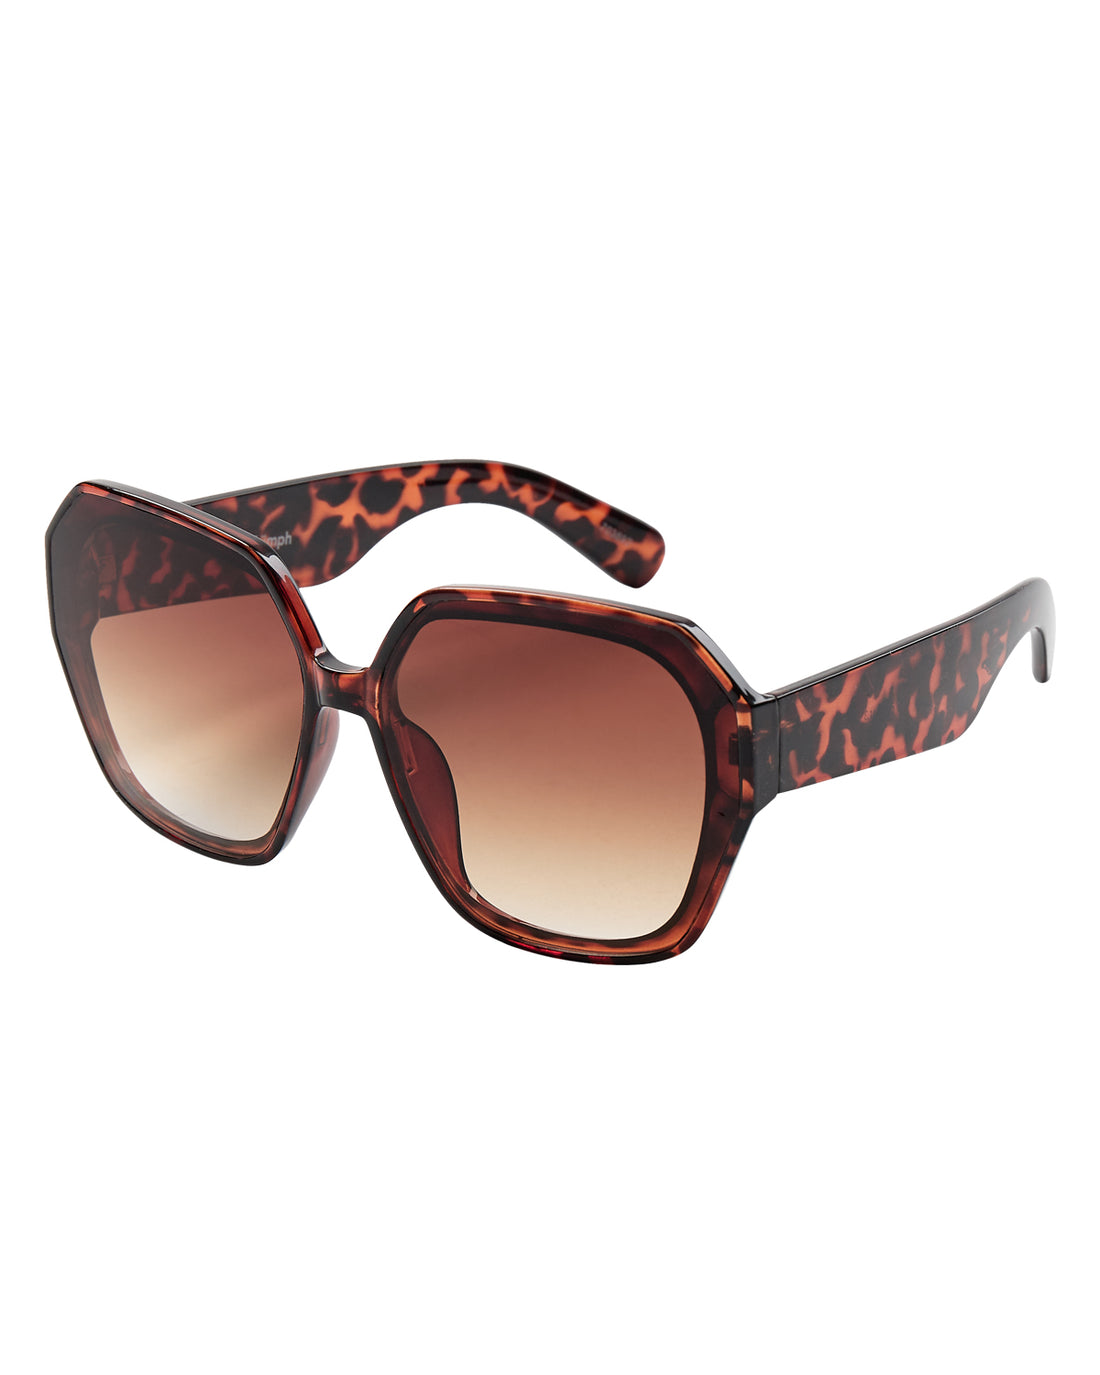 Nuflora Tortoise Sunglasses in Shell with Case